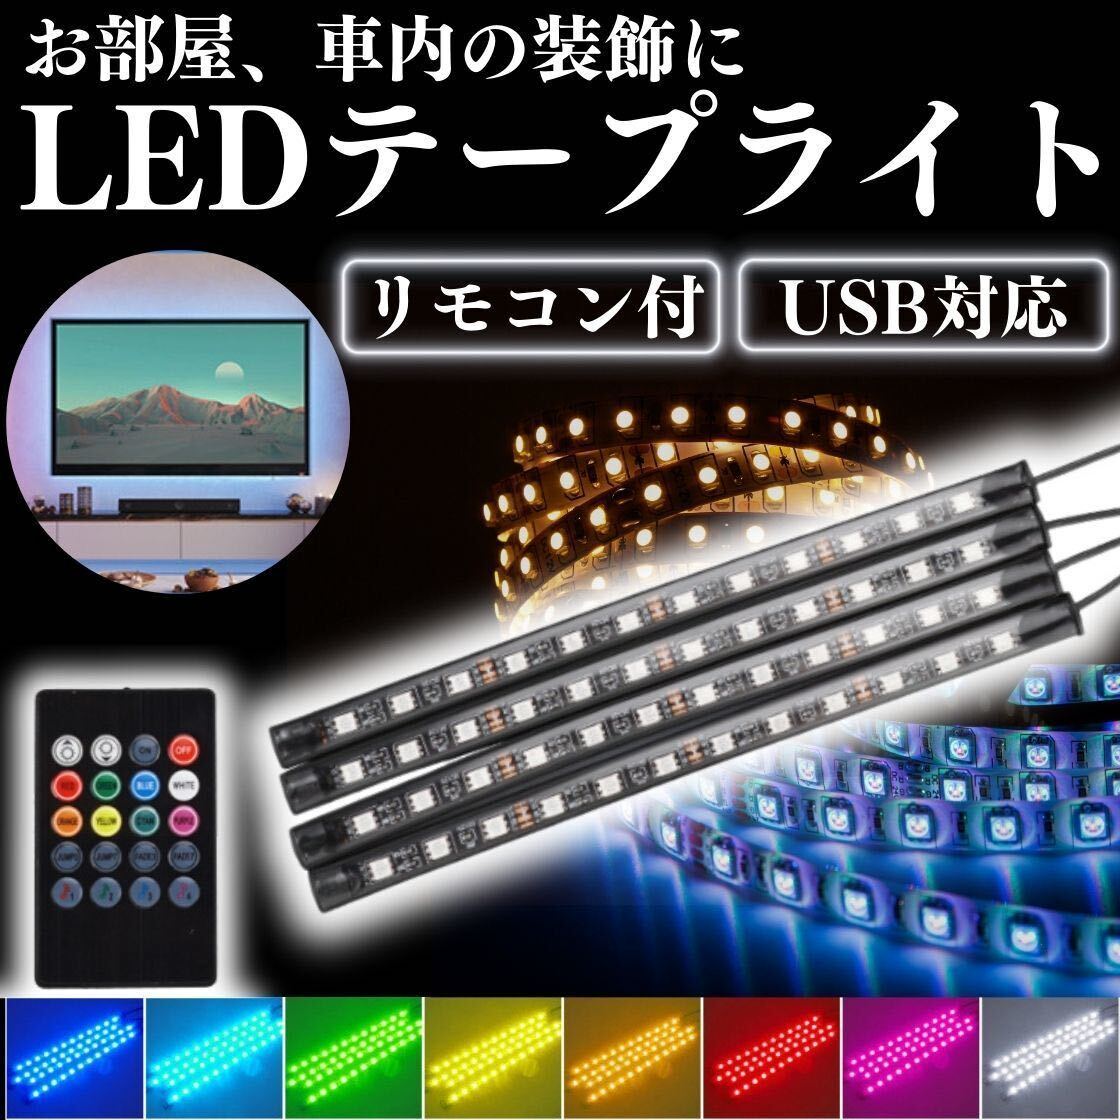 LED テープライト USB 車内 装飾 照明 車内アクセサリー 間接照明 車 リモコン 防水 音楽 白 黄色 フットライト デスク インテリア シール_画像1